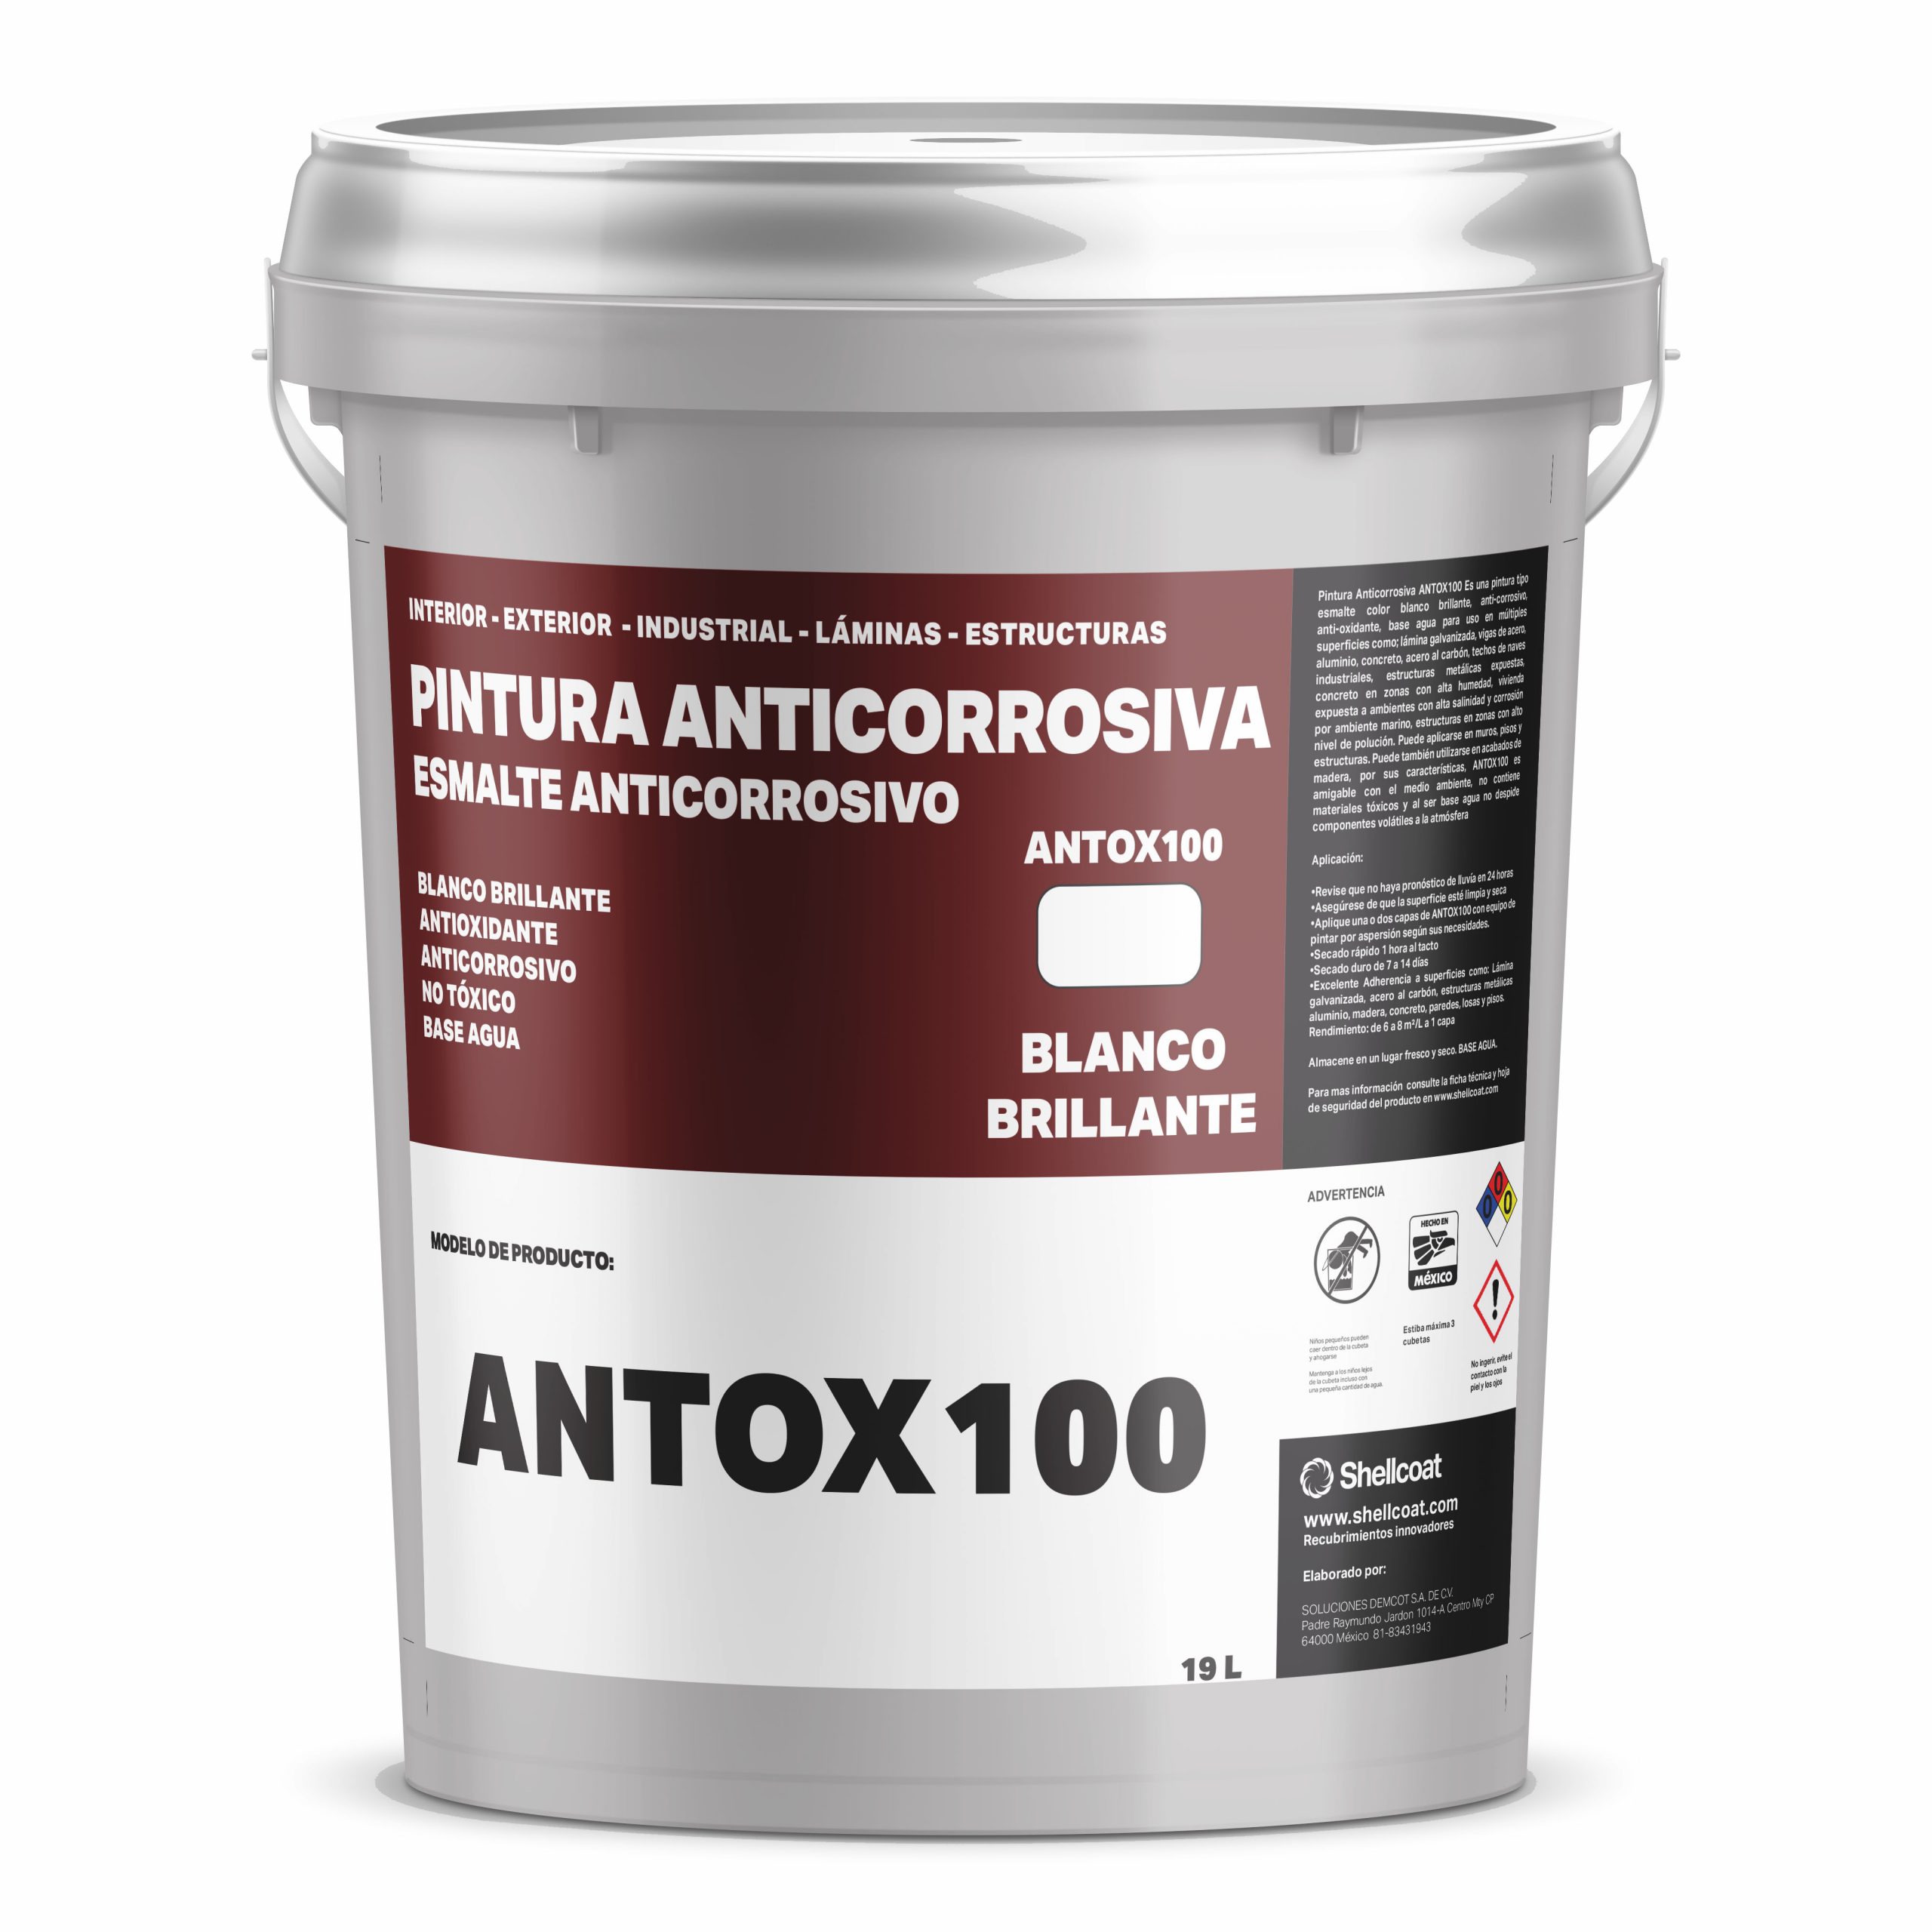 Pintura Anticorrosiva – Blanco – ANTOX100 -19L – Shellcoat